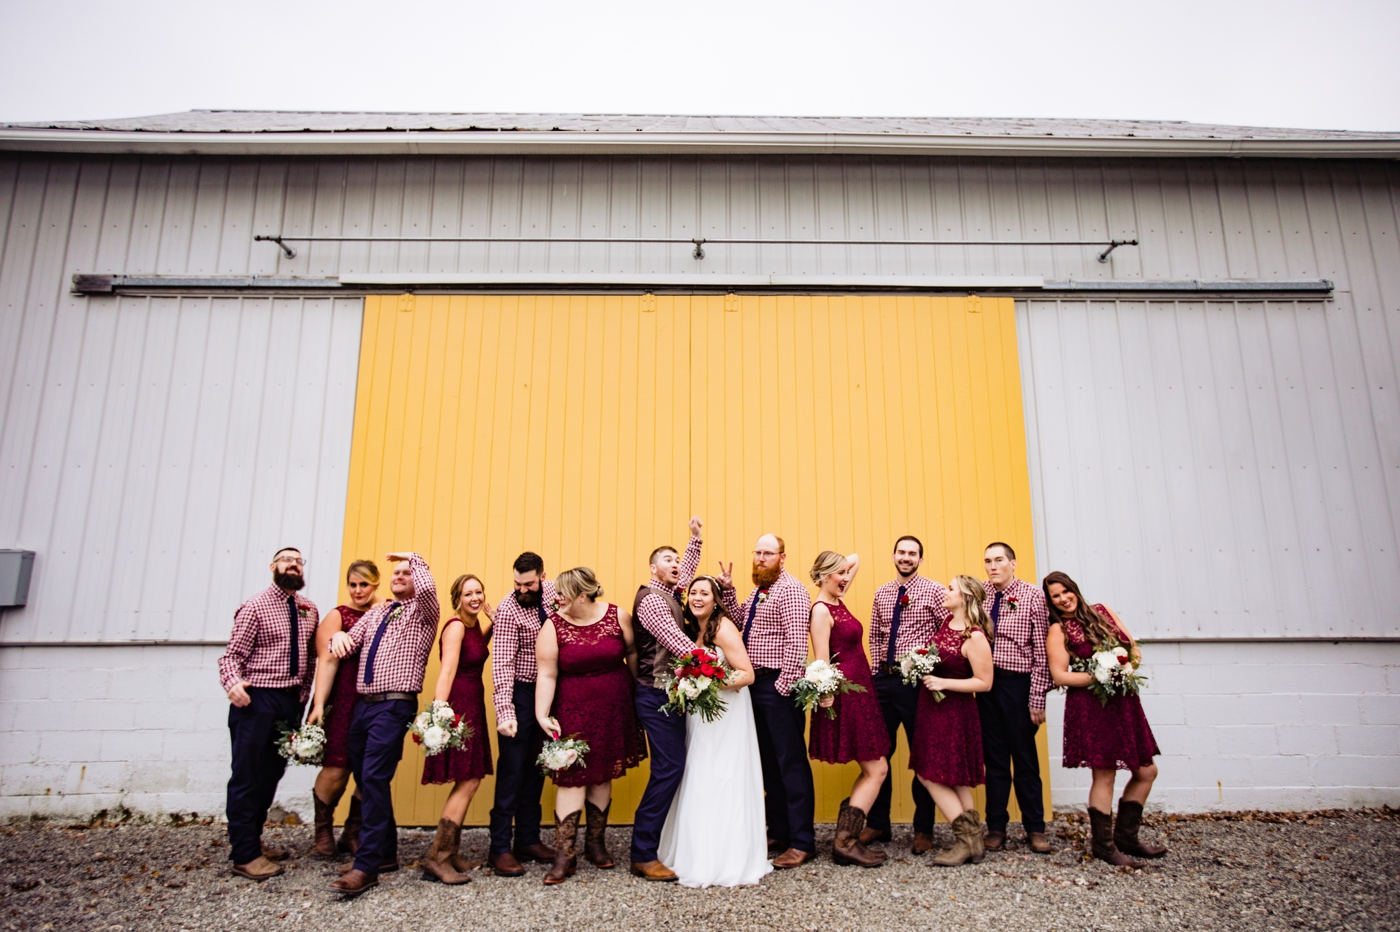 Wedding at Jorgensen Farms - yellow barn doors